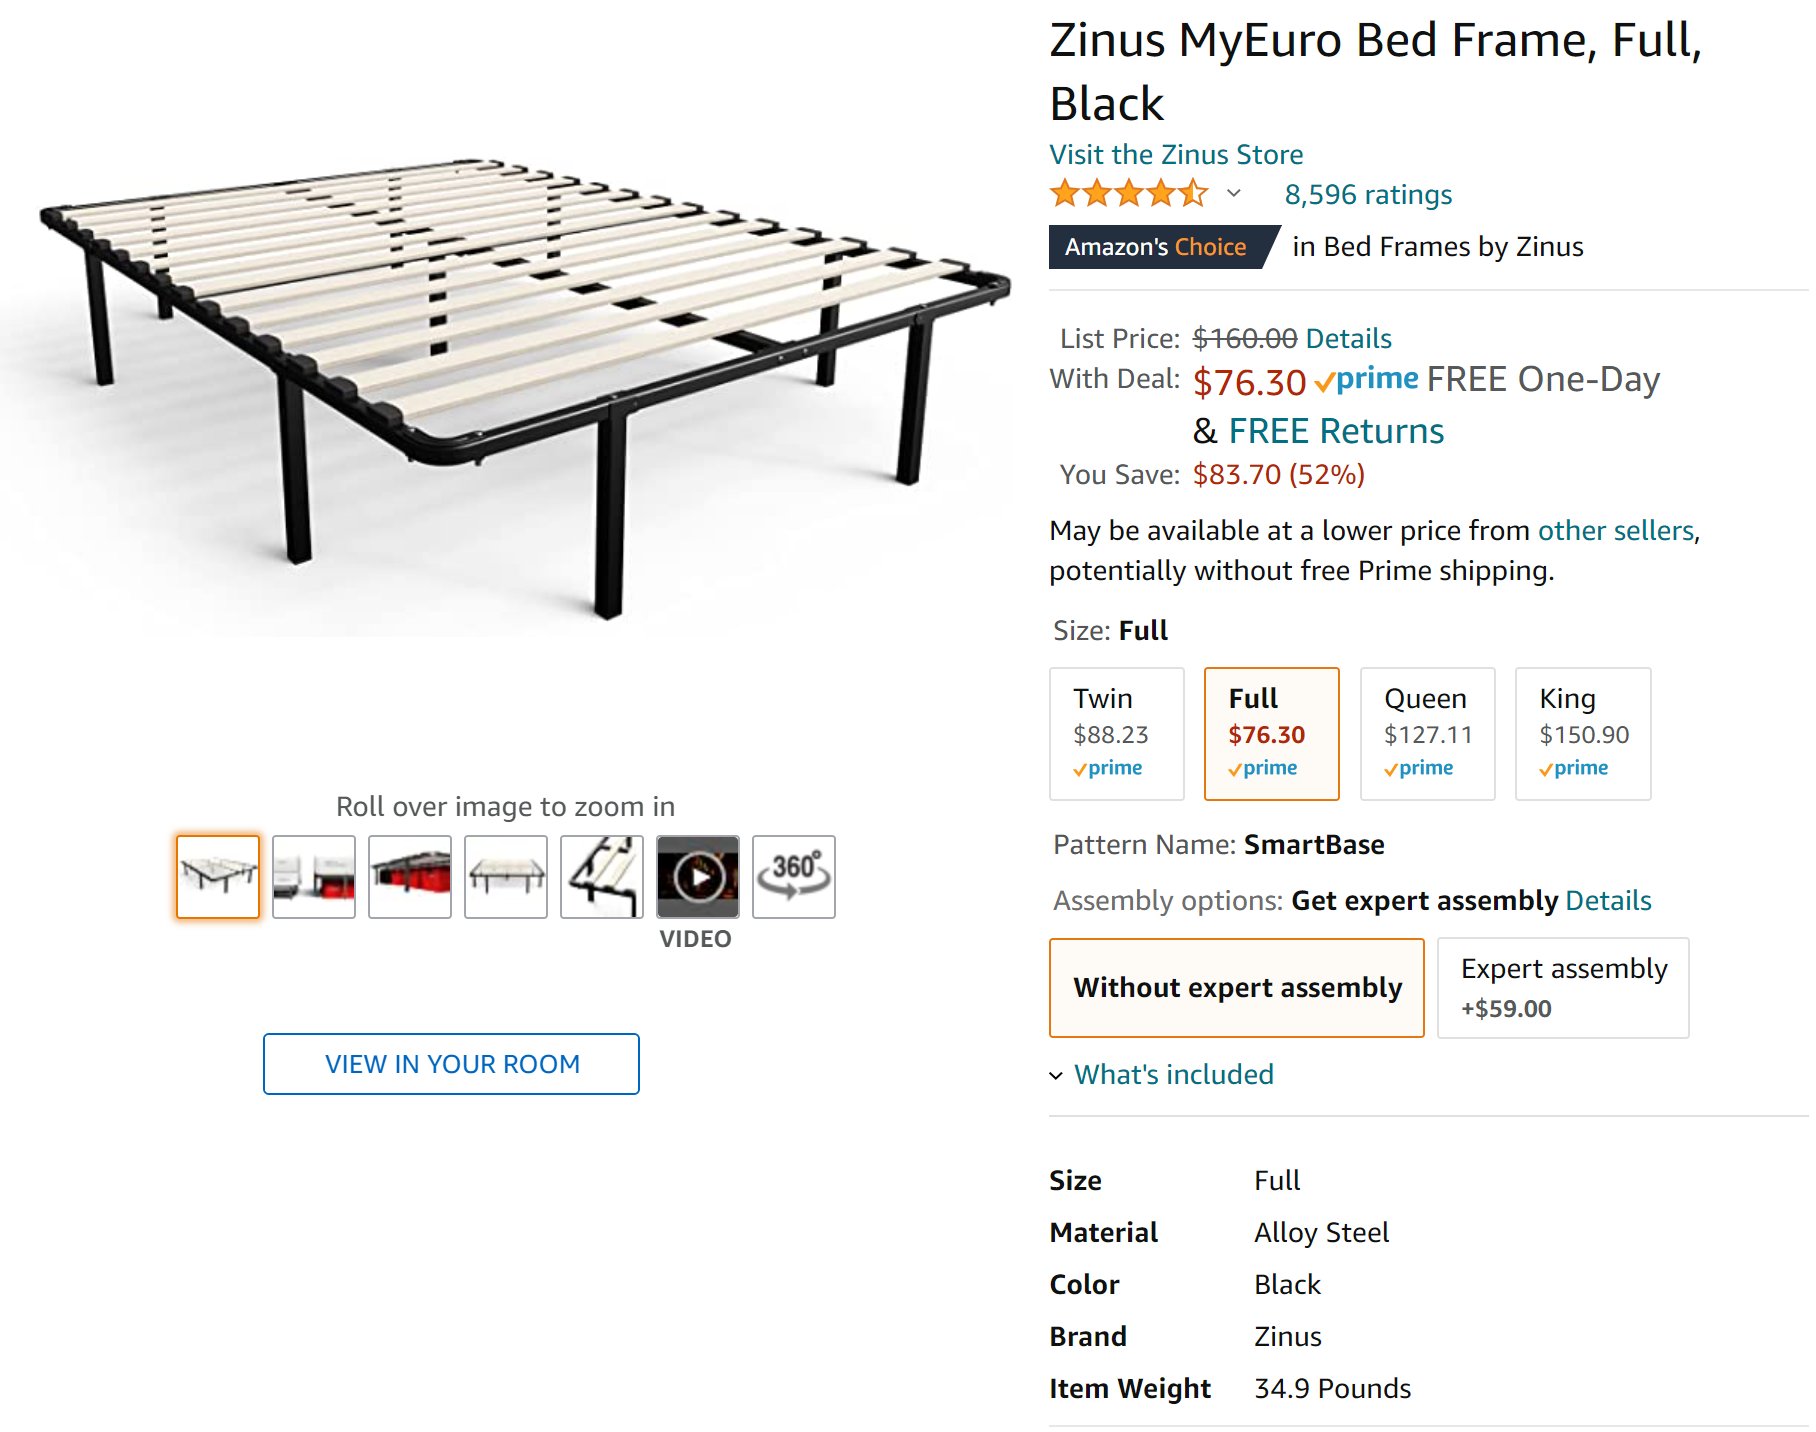 Zinus 床架半价 - MyEuro Bed Frame, Full size（仅限今日）